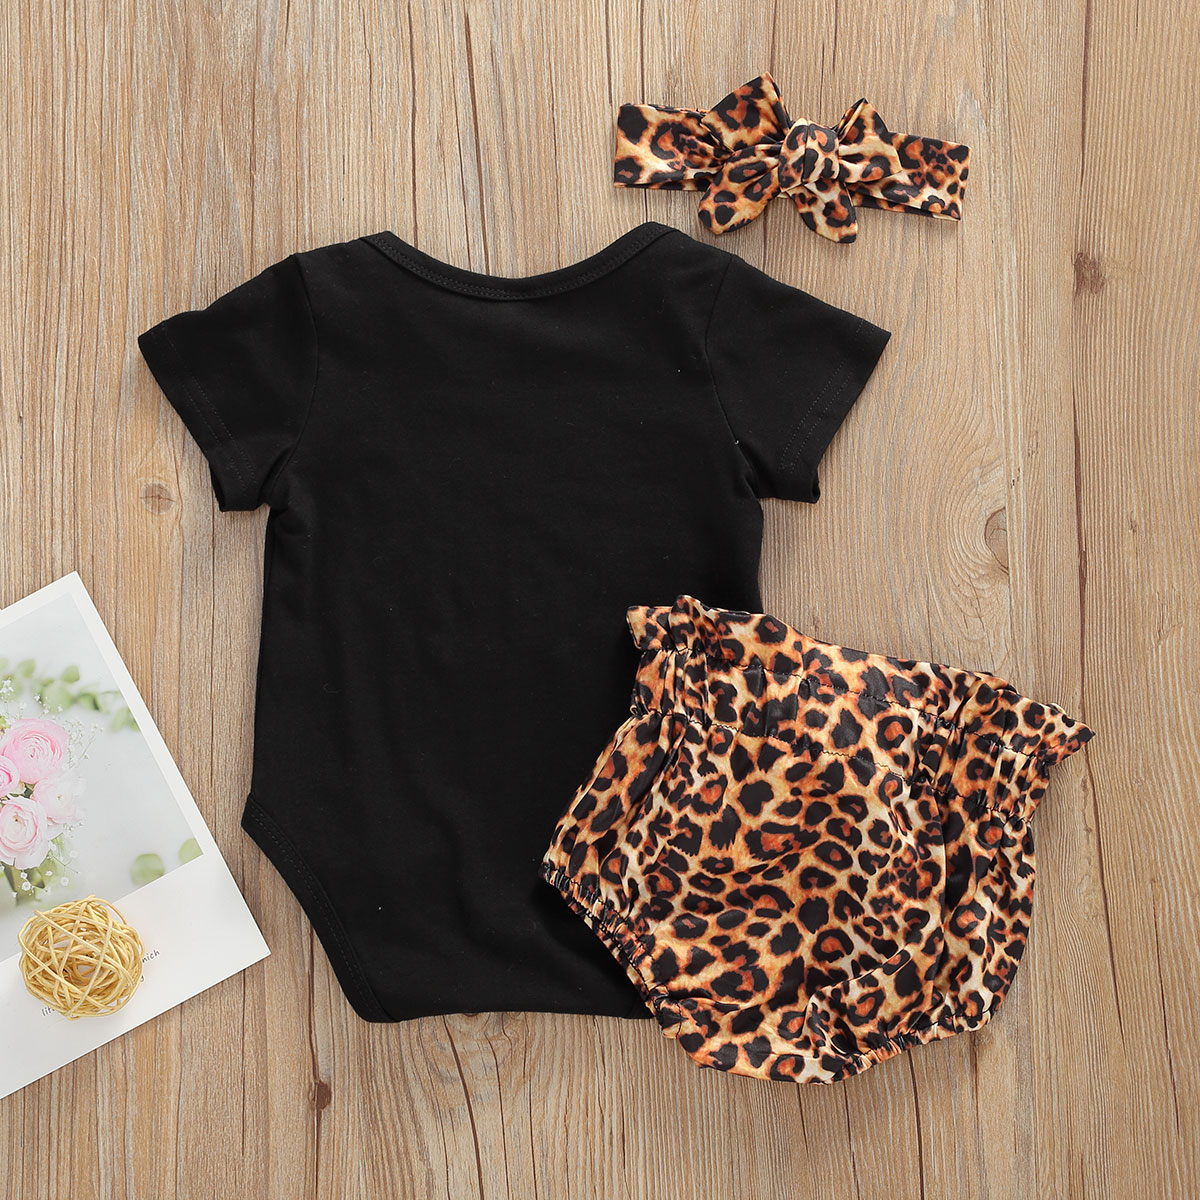 2020 Baby Summer Clothing 0-18M Newborn Baby Girl Set Short Sleeve Letter Print Jumpsuit Top + Bow Leopard Short Headband 3Pcs